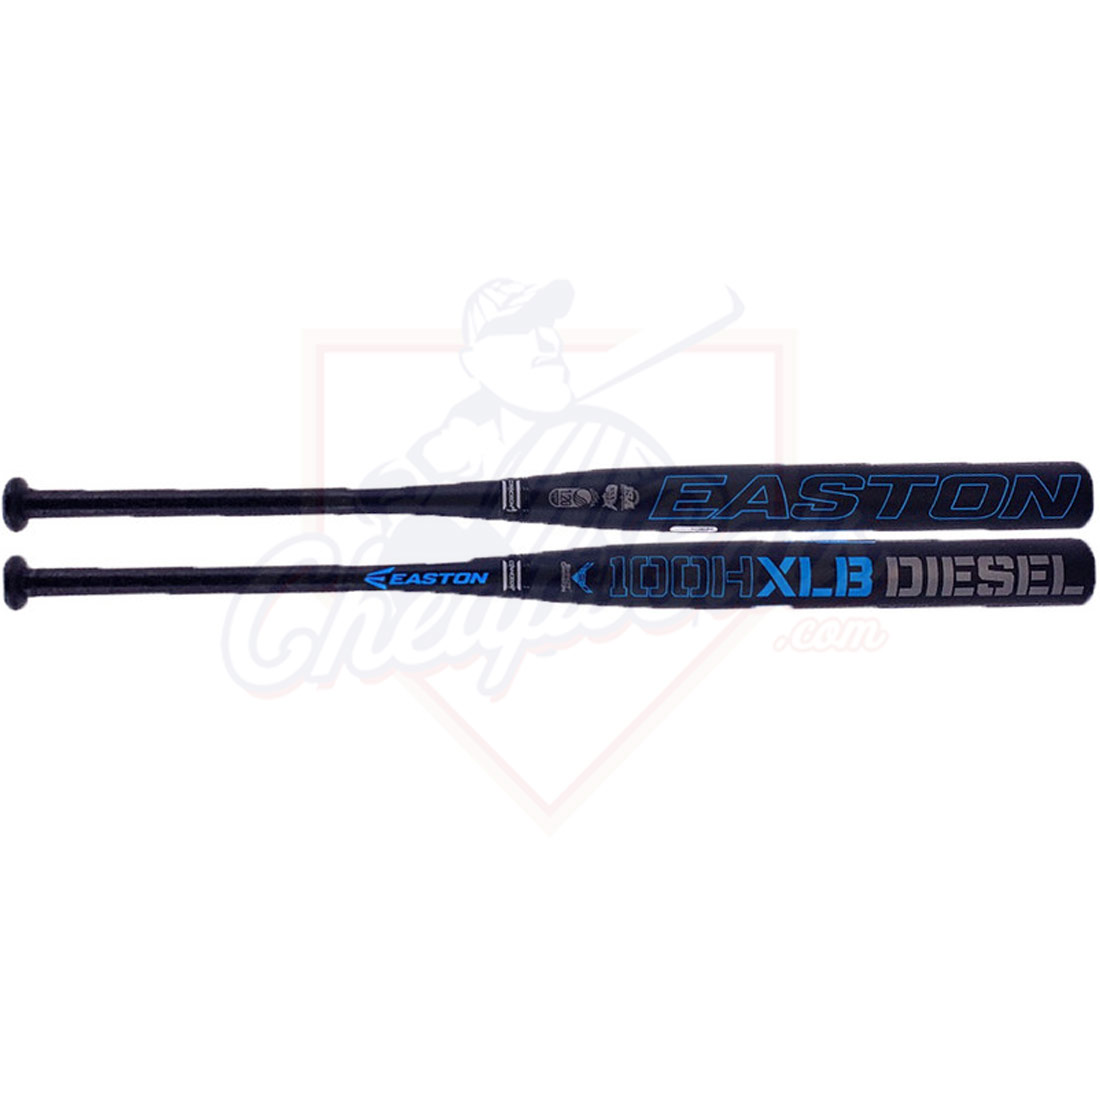 CLOSEOUT 2019 Easton Helmer 100H XLB Diesel Slowpitch Softball Bat Balanced USSSA SP19100HXLB